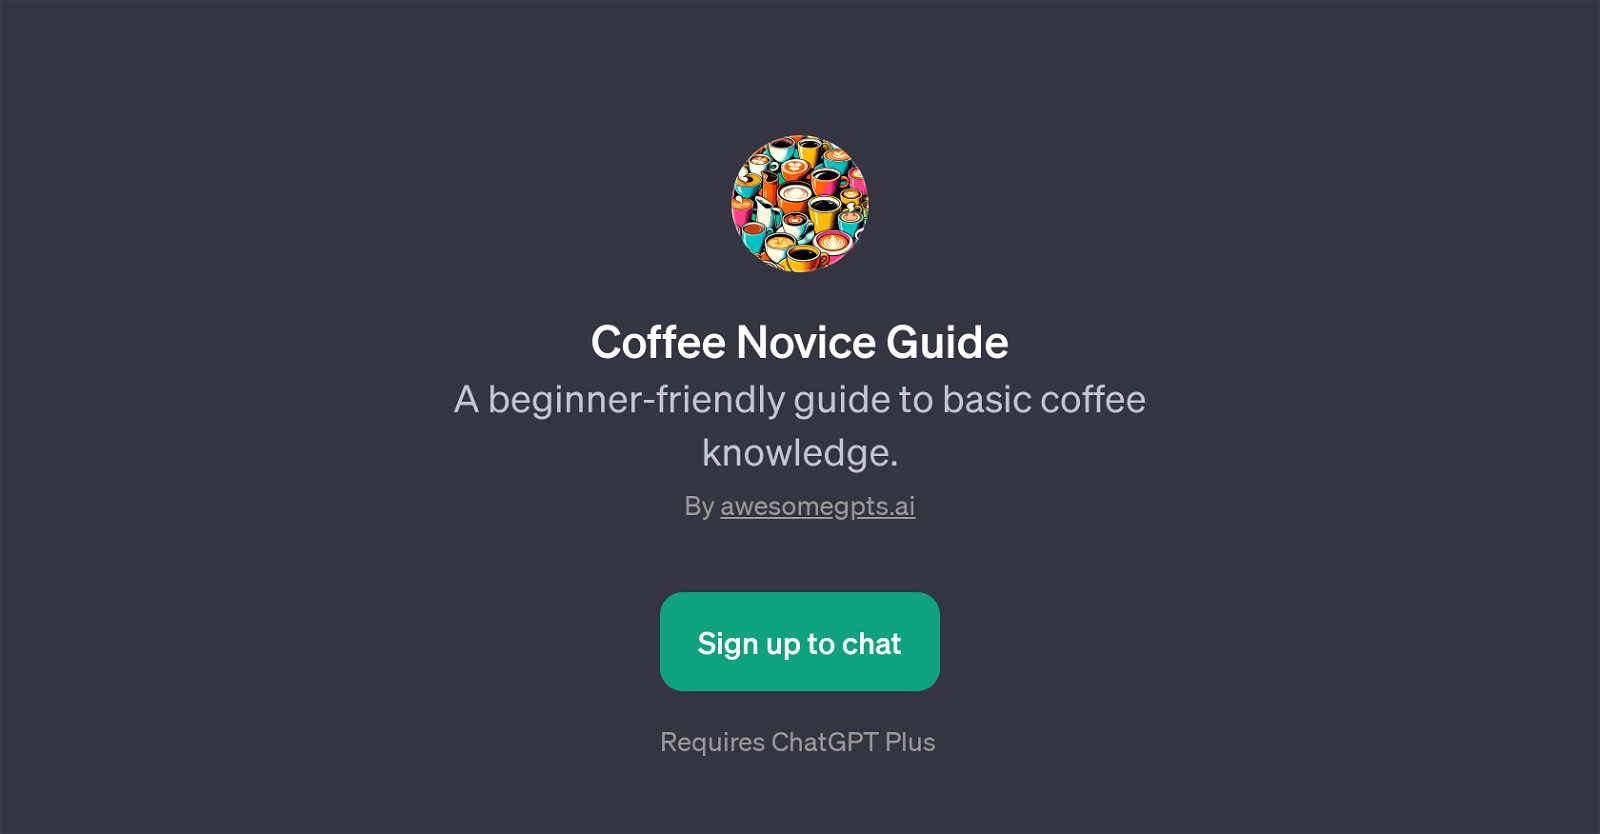 Coffee Novice Guide website